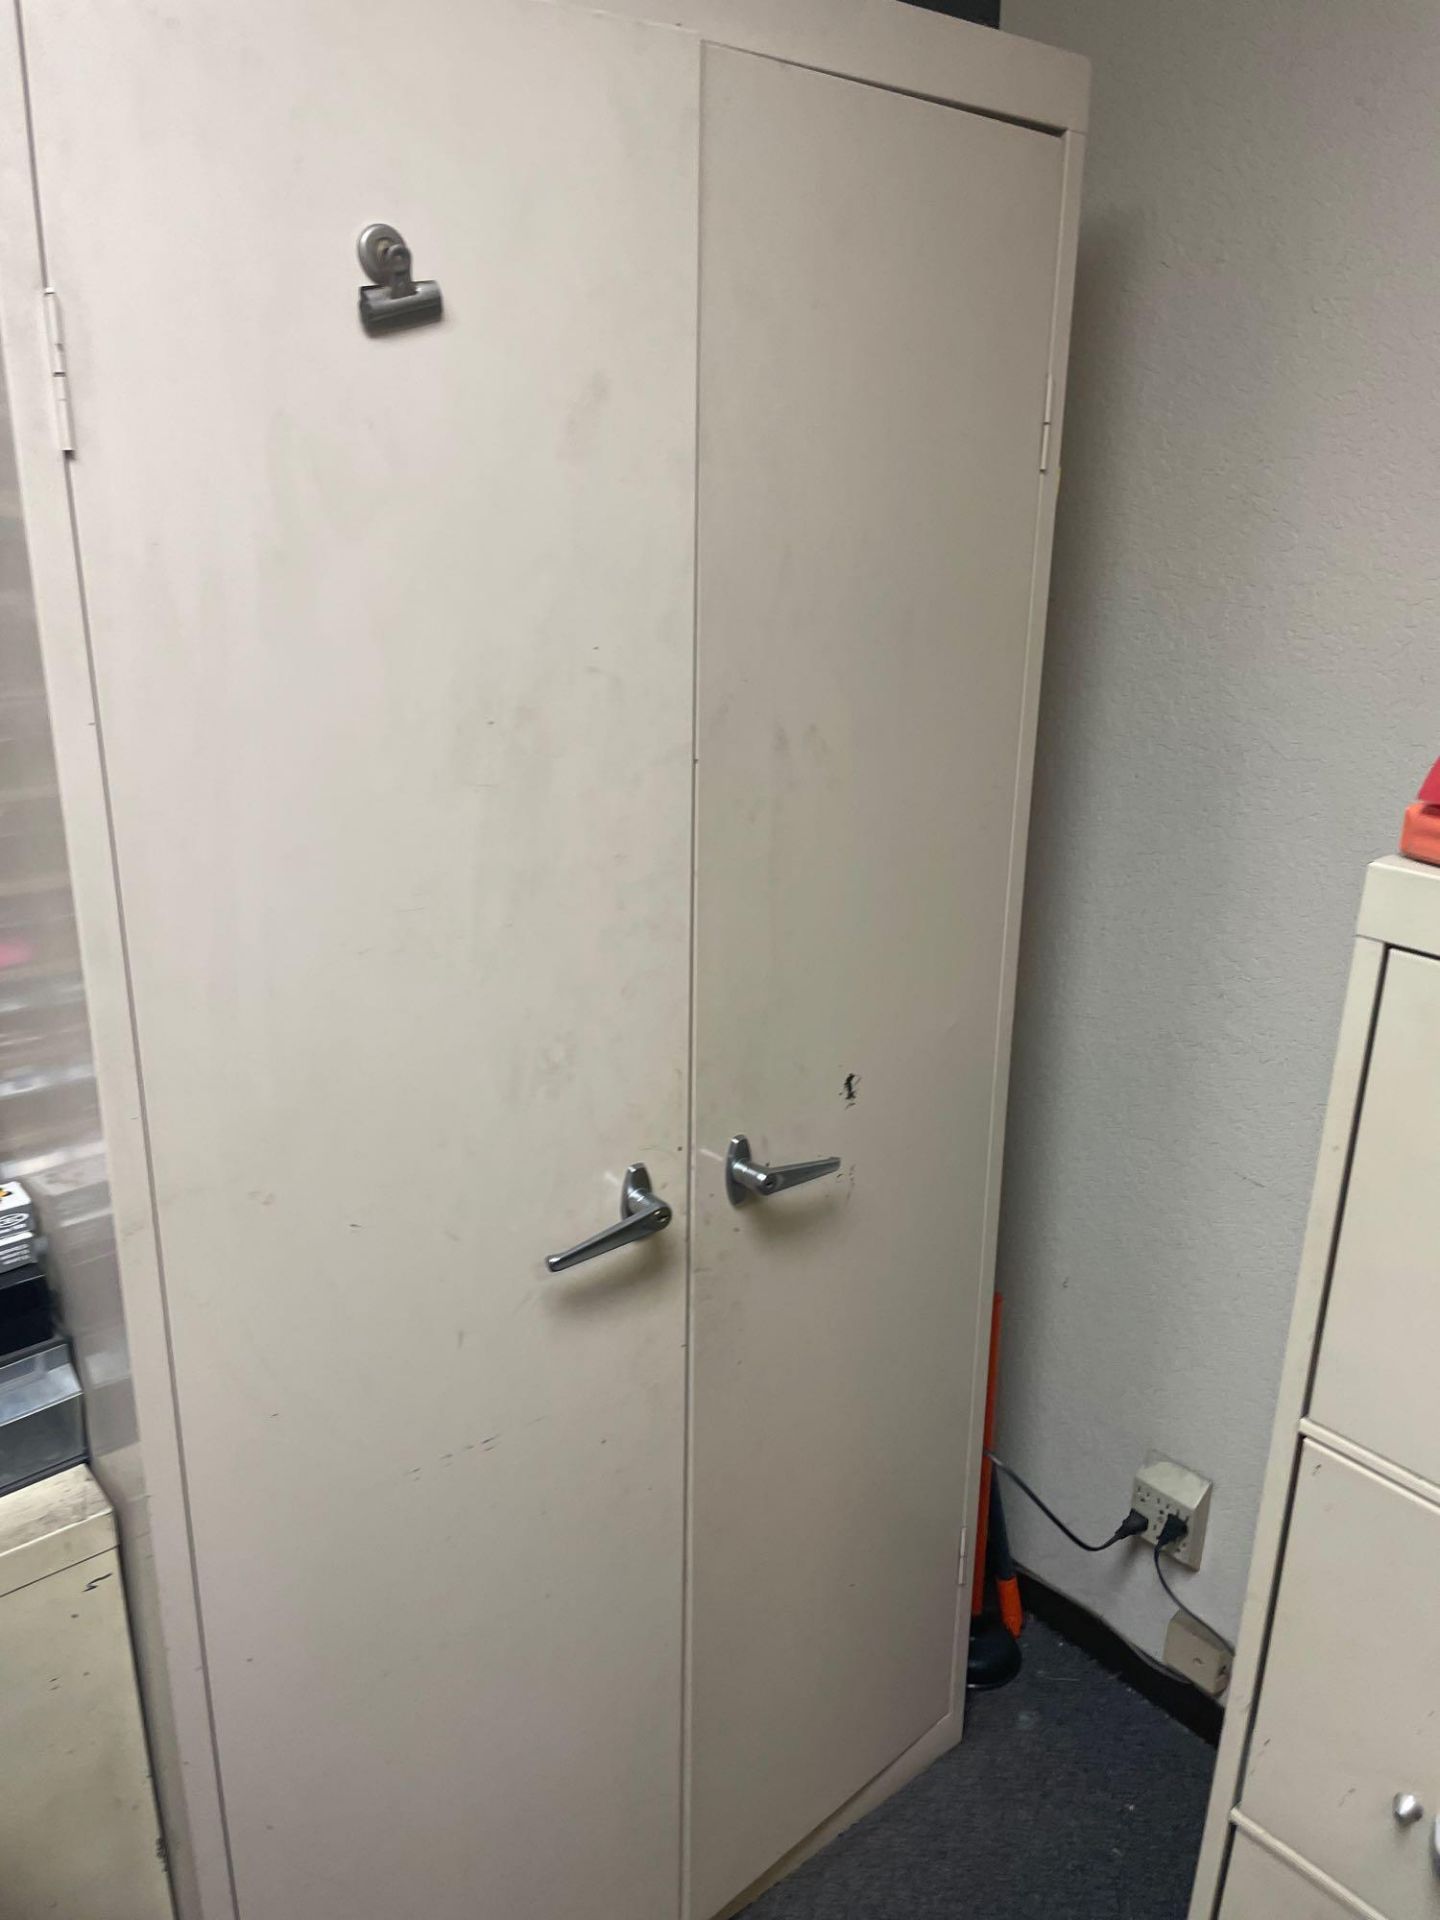 2 Door Cabinet with Content - Image 2 of 3